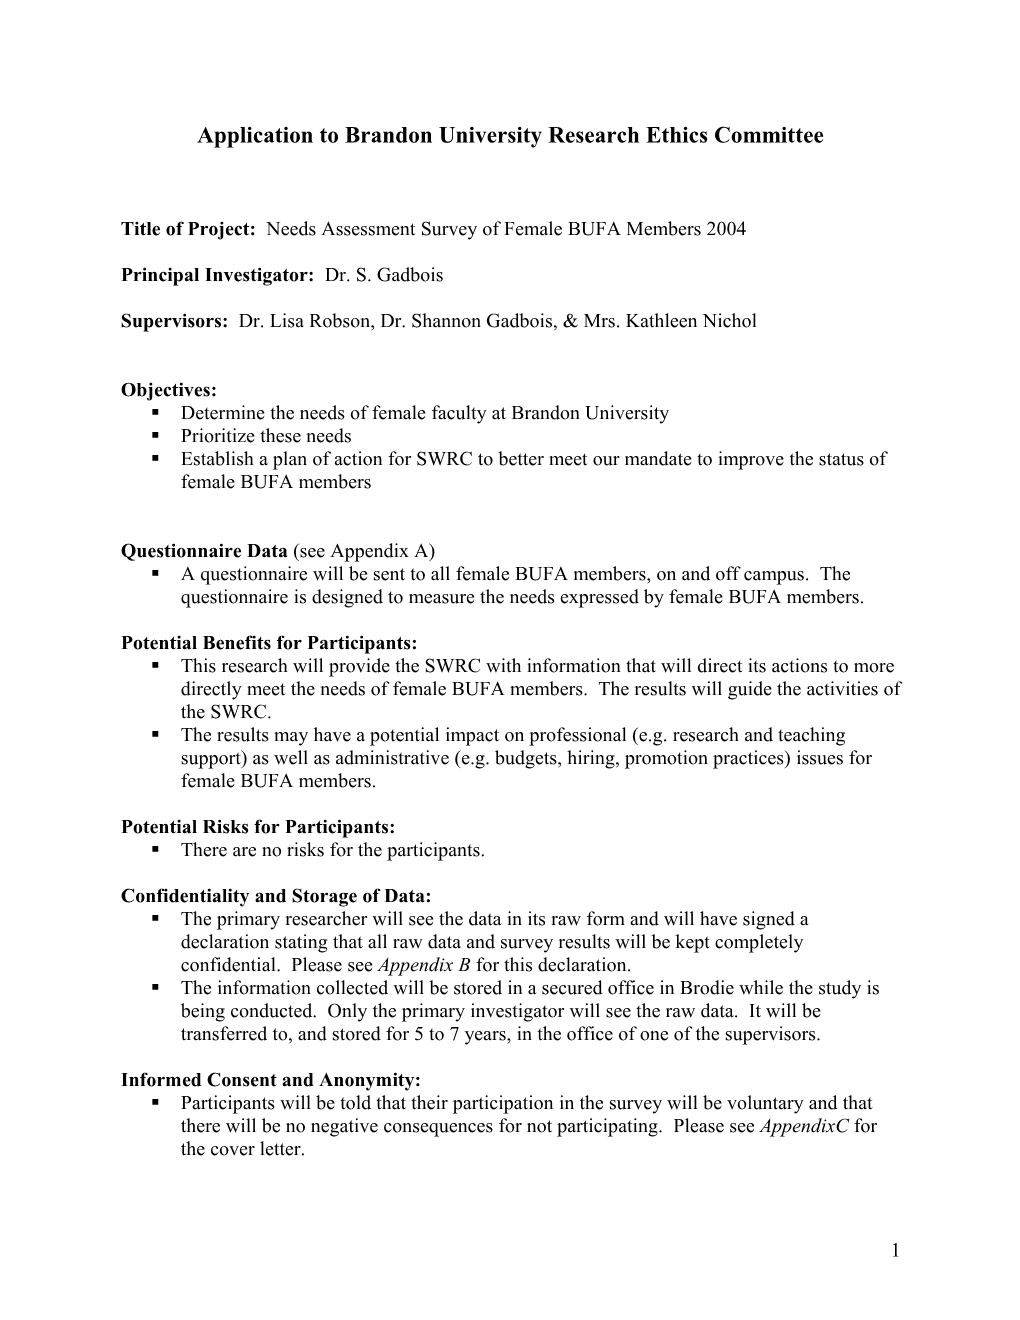 Application to Brandon University Research Ethics Committee (BUREC)